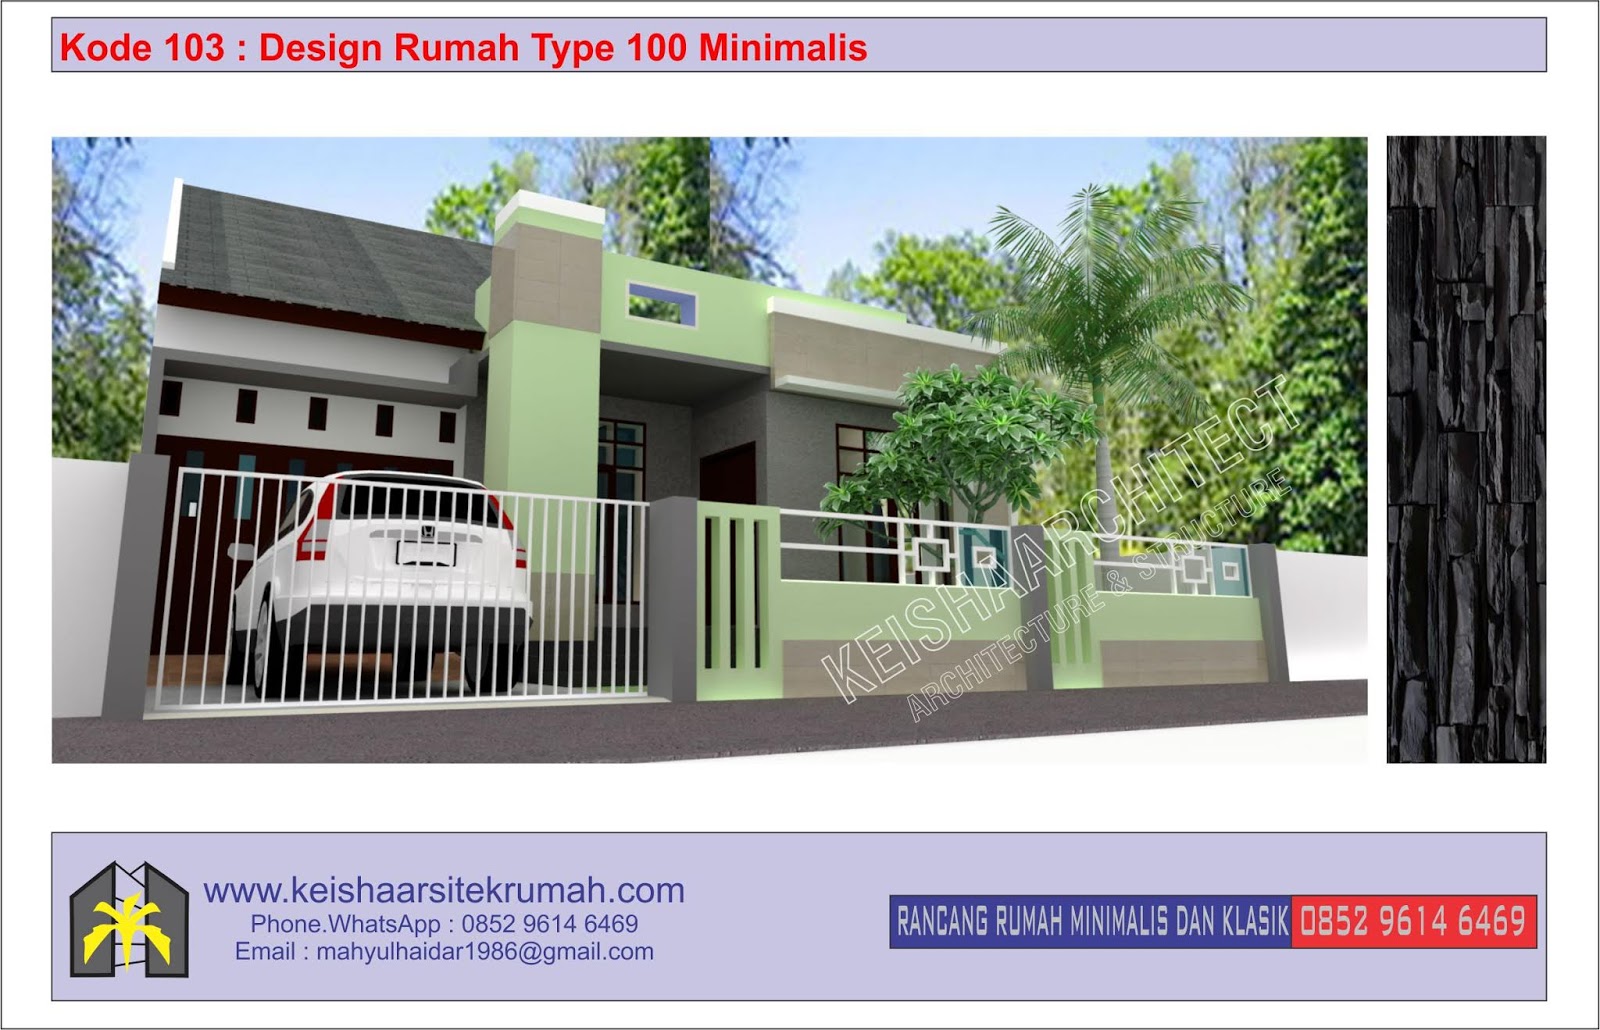 Kode 103 Design Rumah Type 100 Minimalis Lokasi Emperum Kota